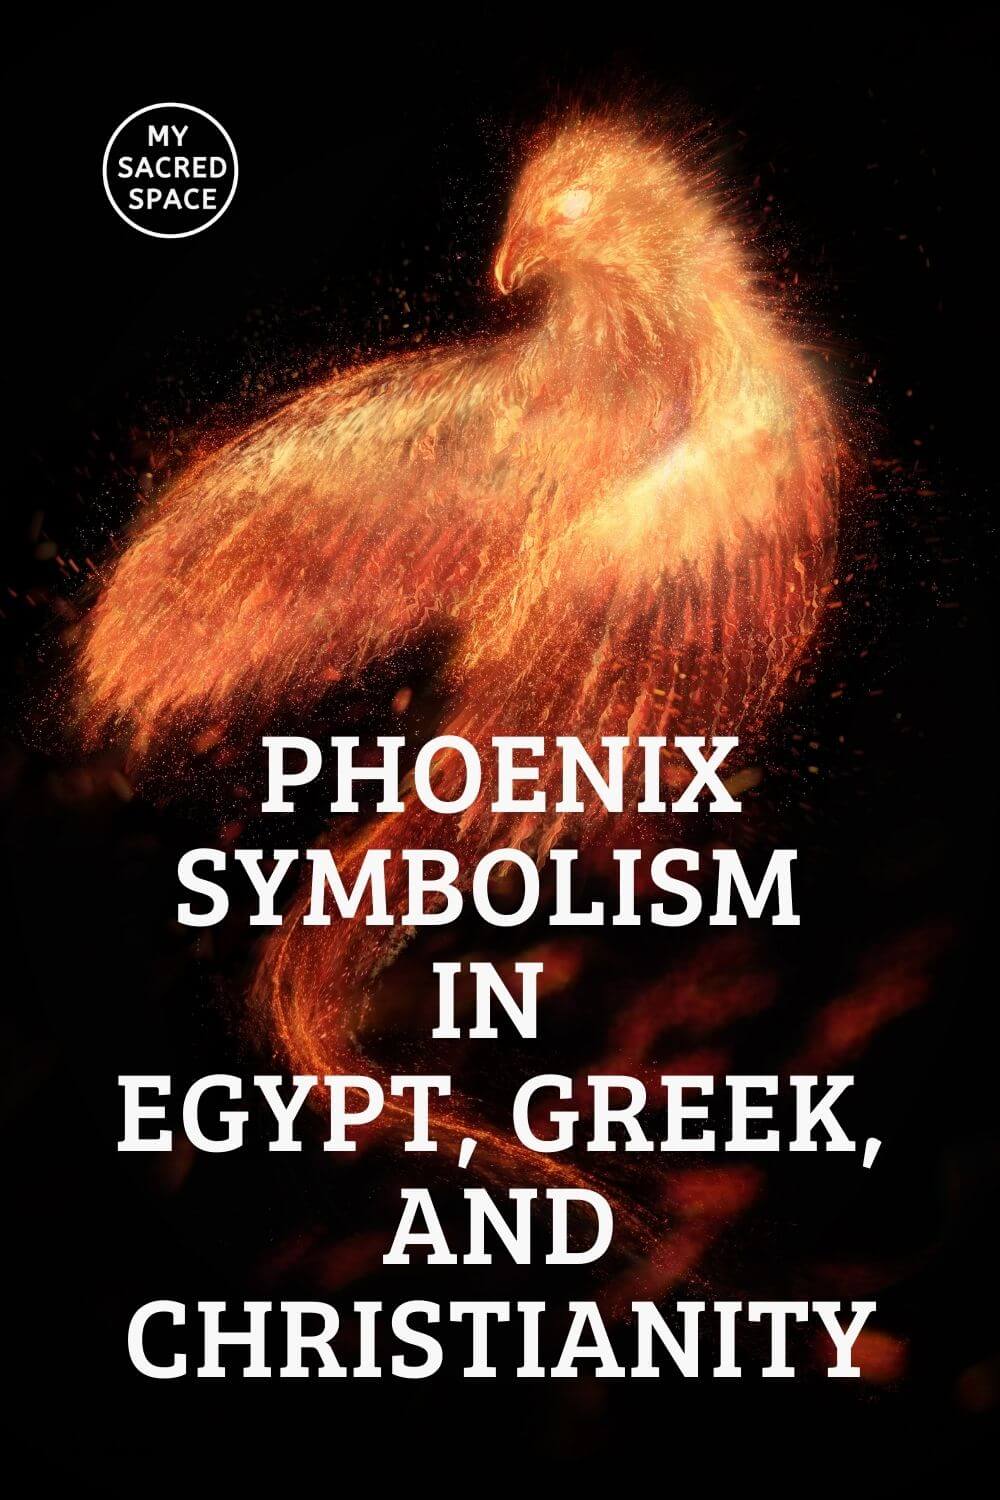 phoenix symbolism in egypt greek and christianity